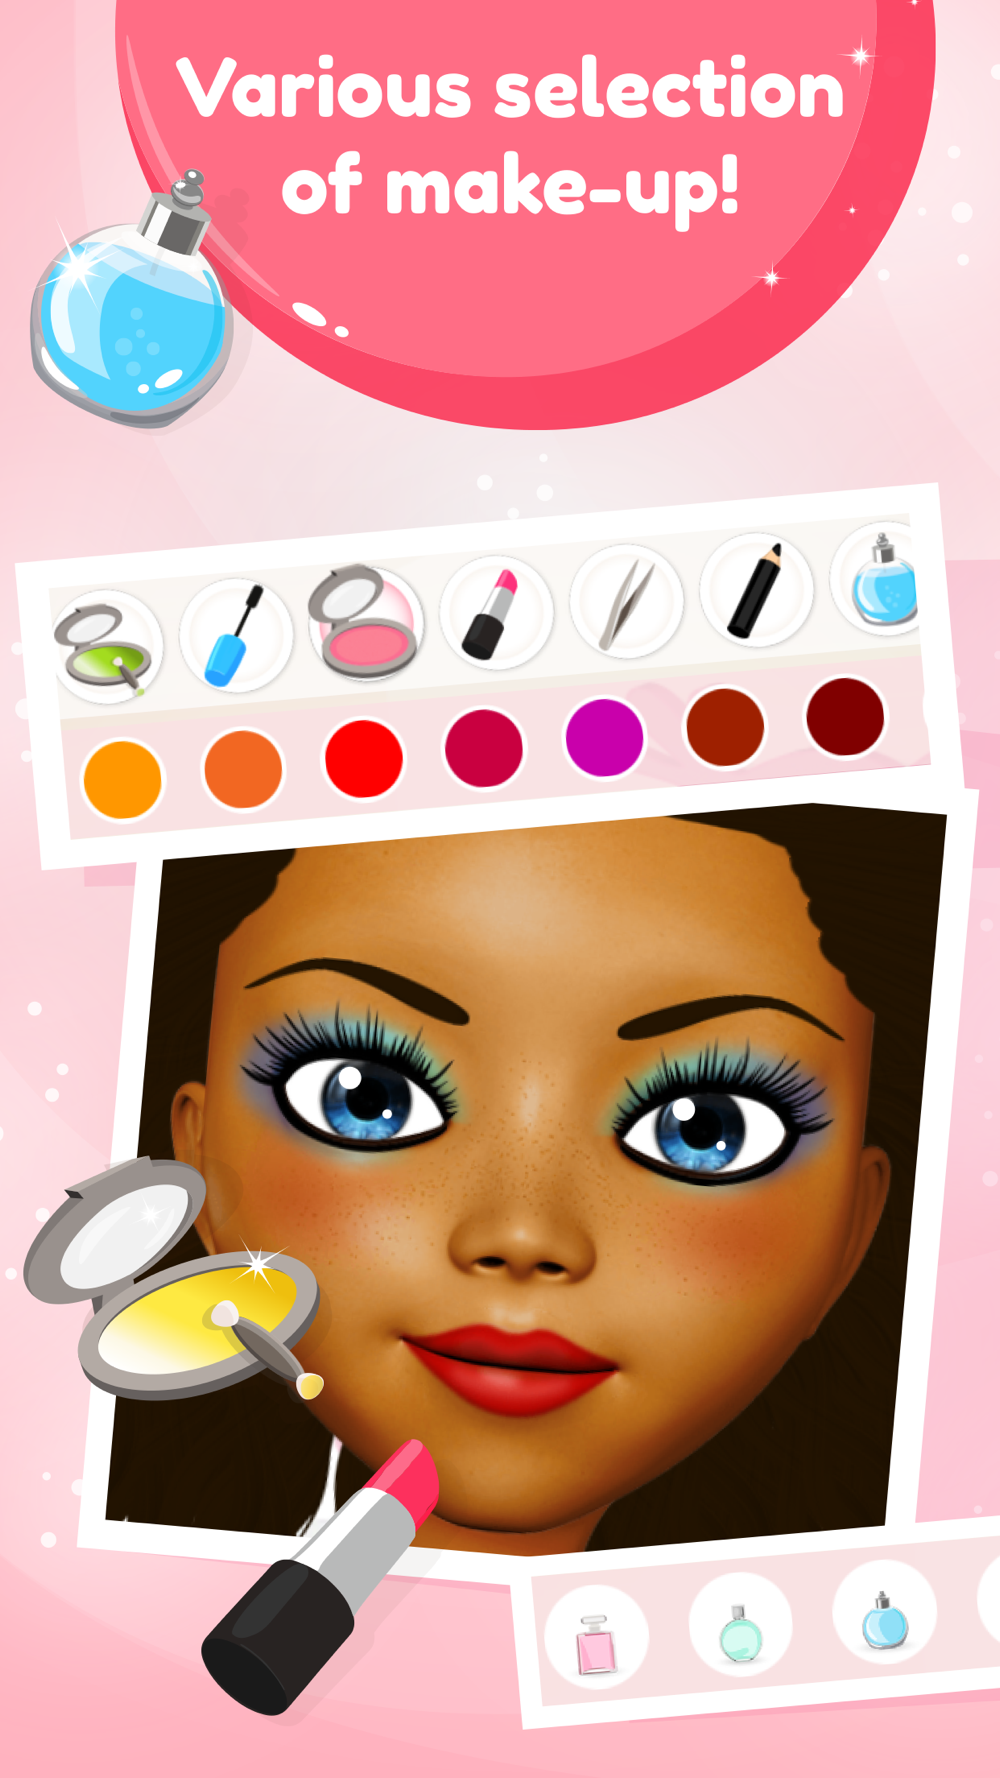 Princess Hair Makeup Salon Free Download App for iPhone - STEPrimo.com